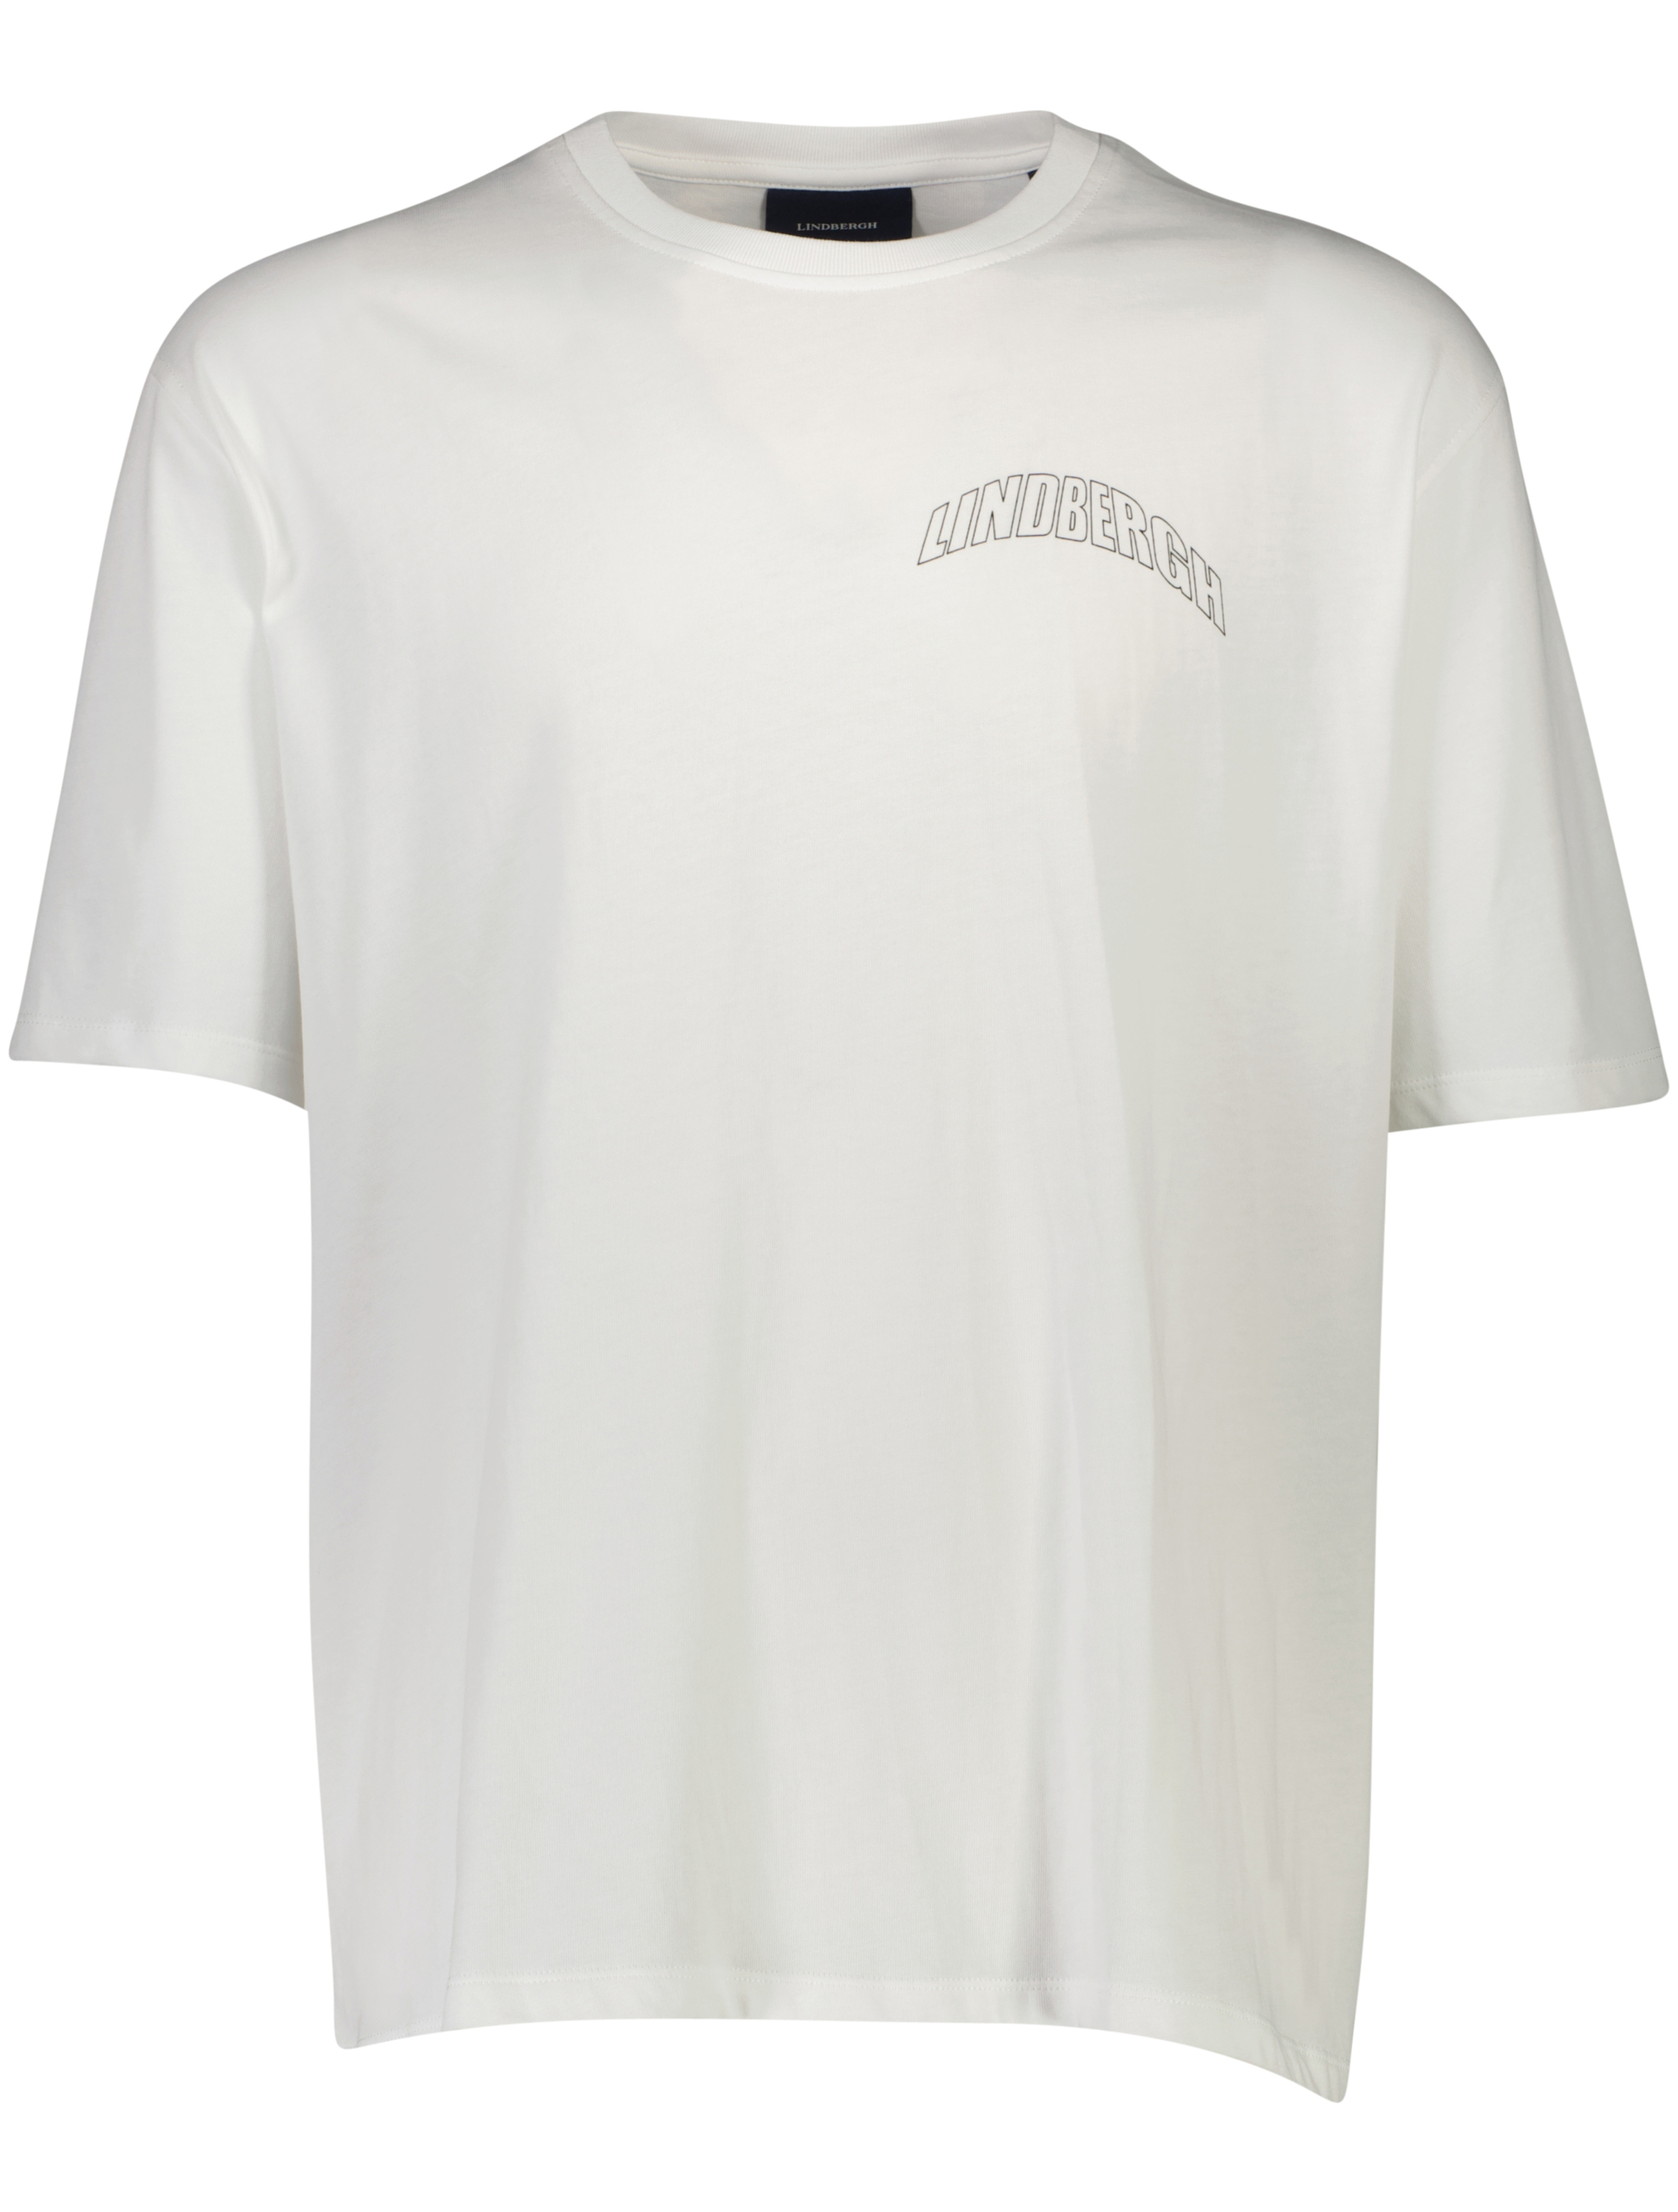 Lindbergh T-shirt wit / off white